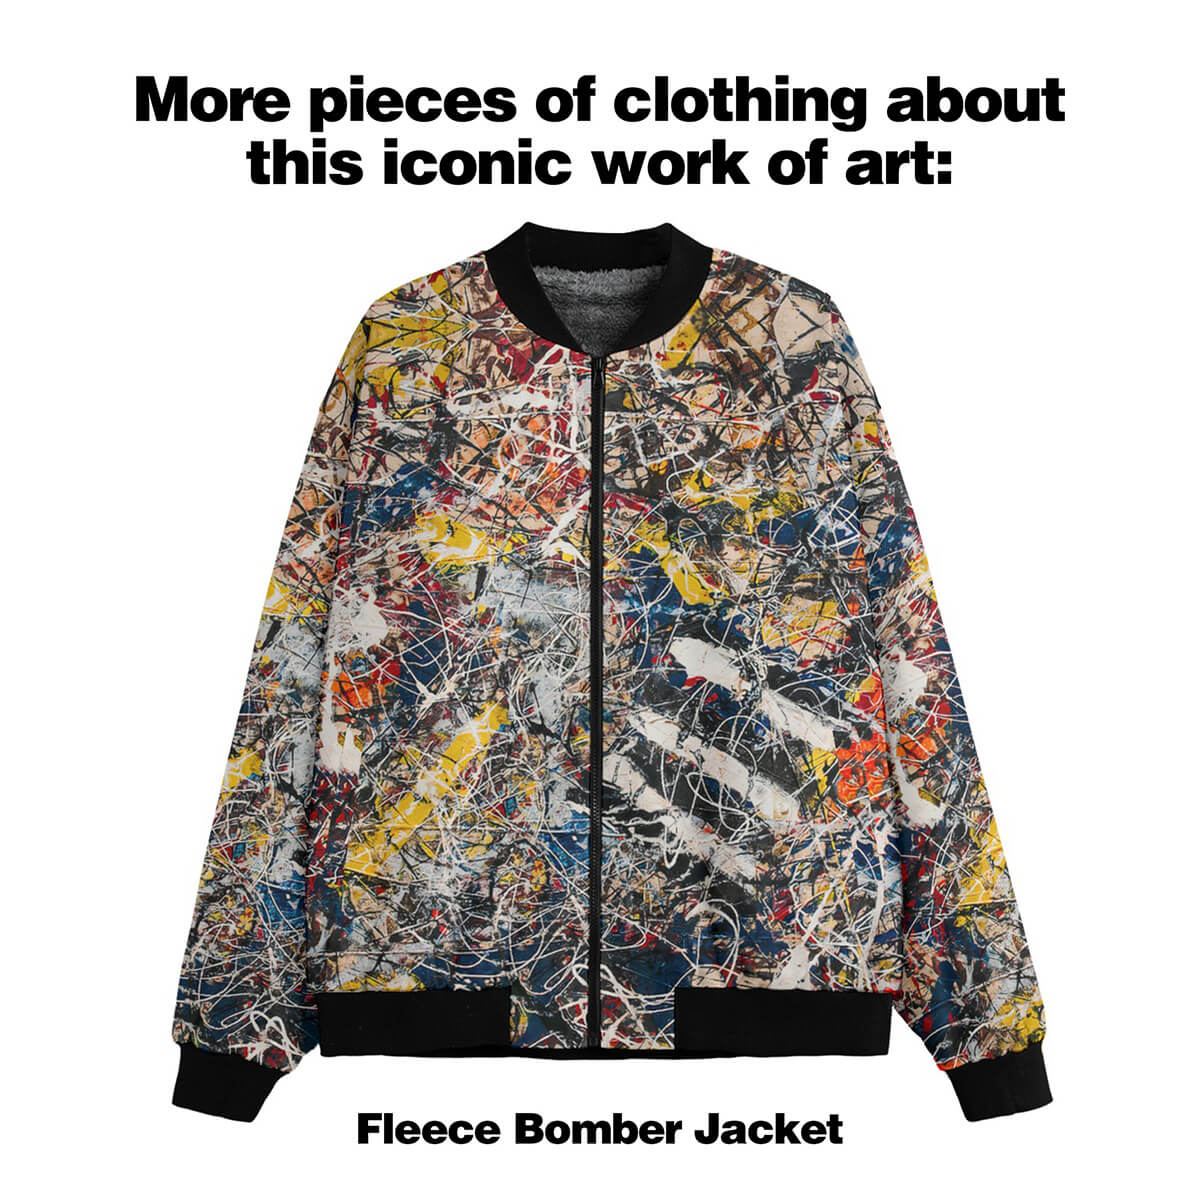 Dámské sako číslo 17A od Jacksona Pollocka Art